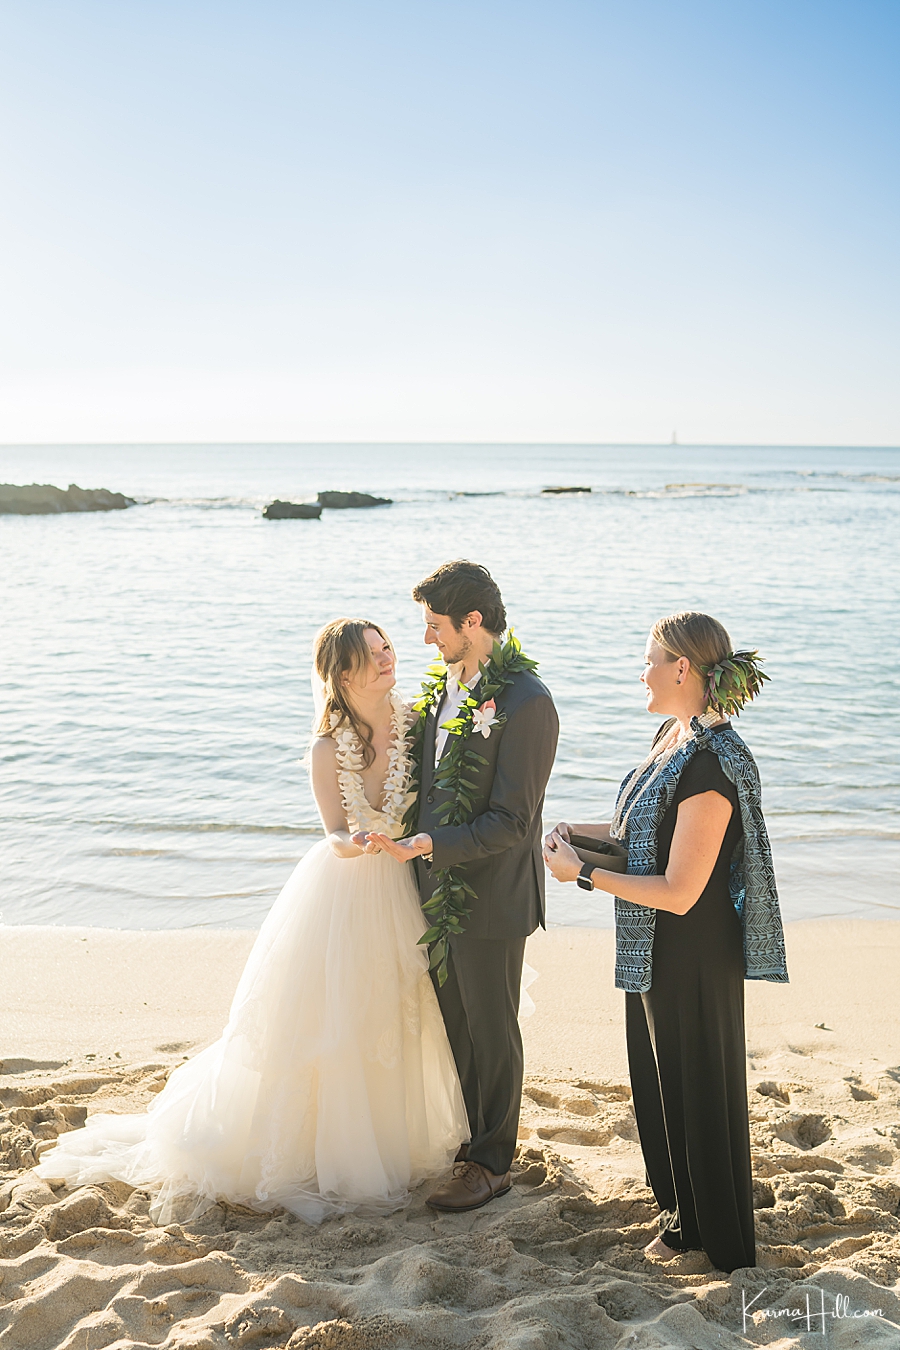 Wedding planners Oahu
